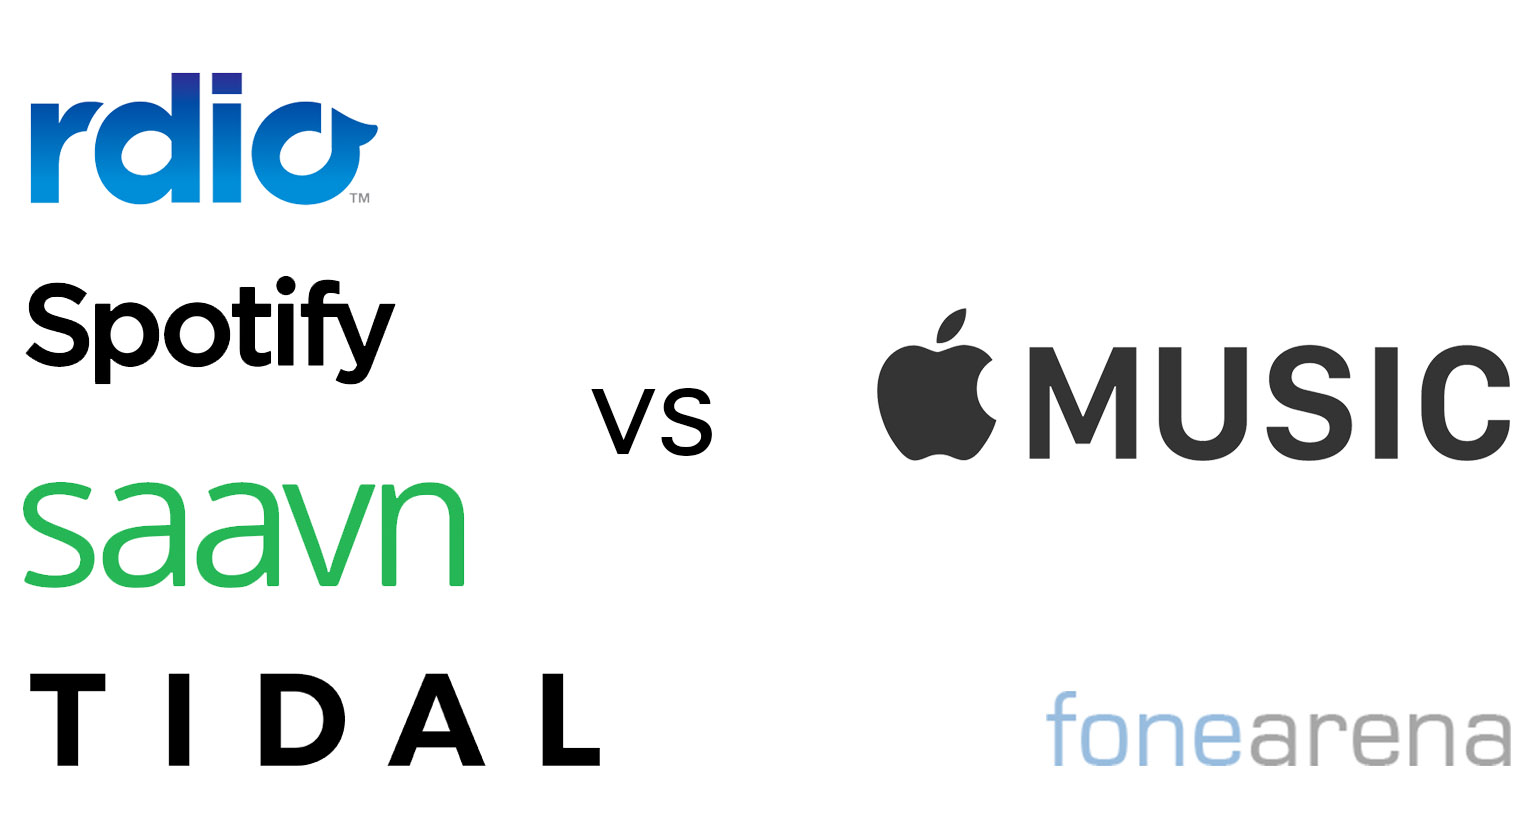 apple music vs spotify market share